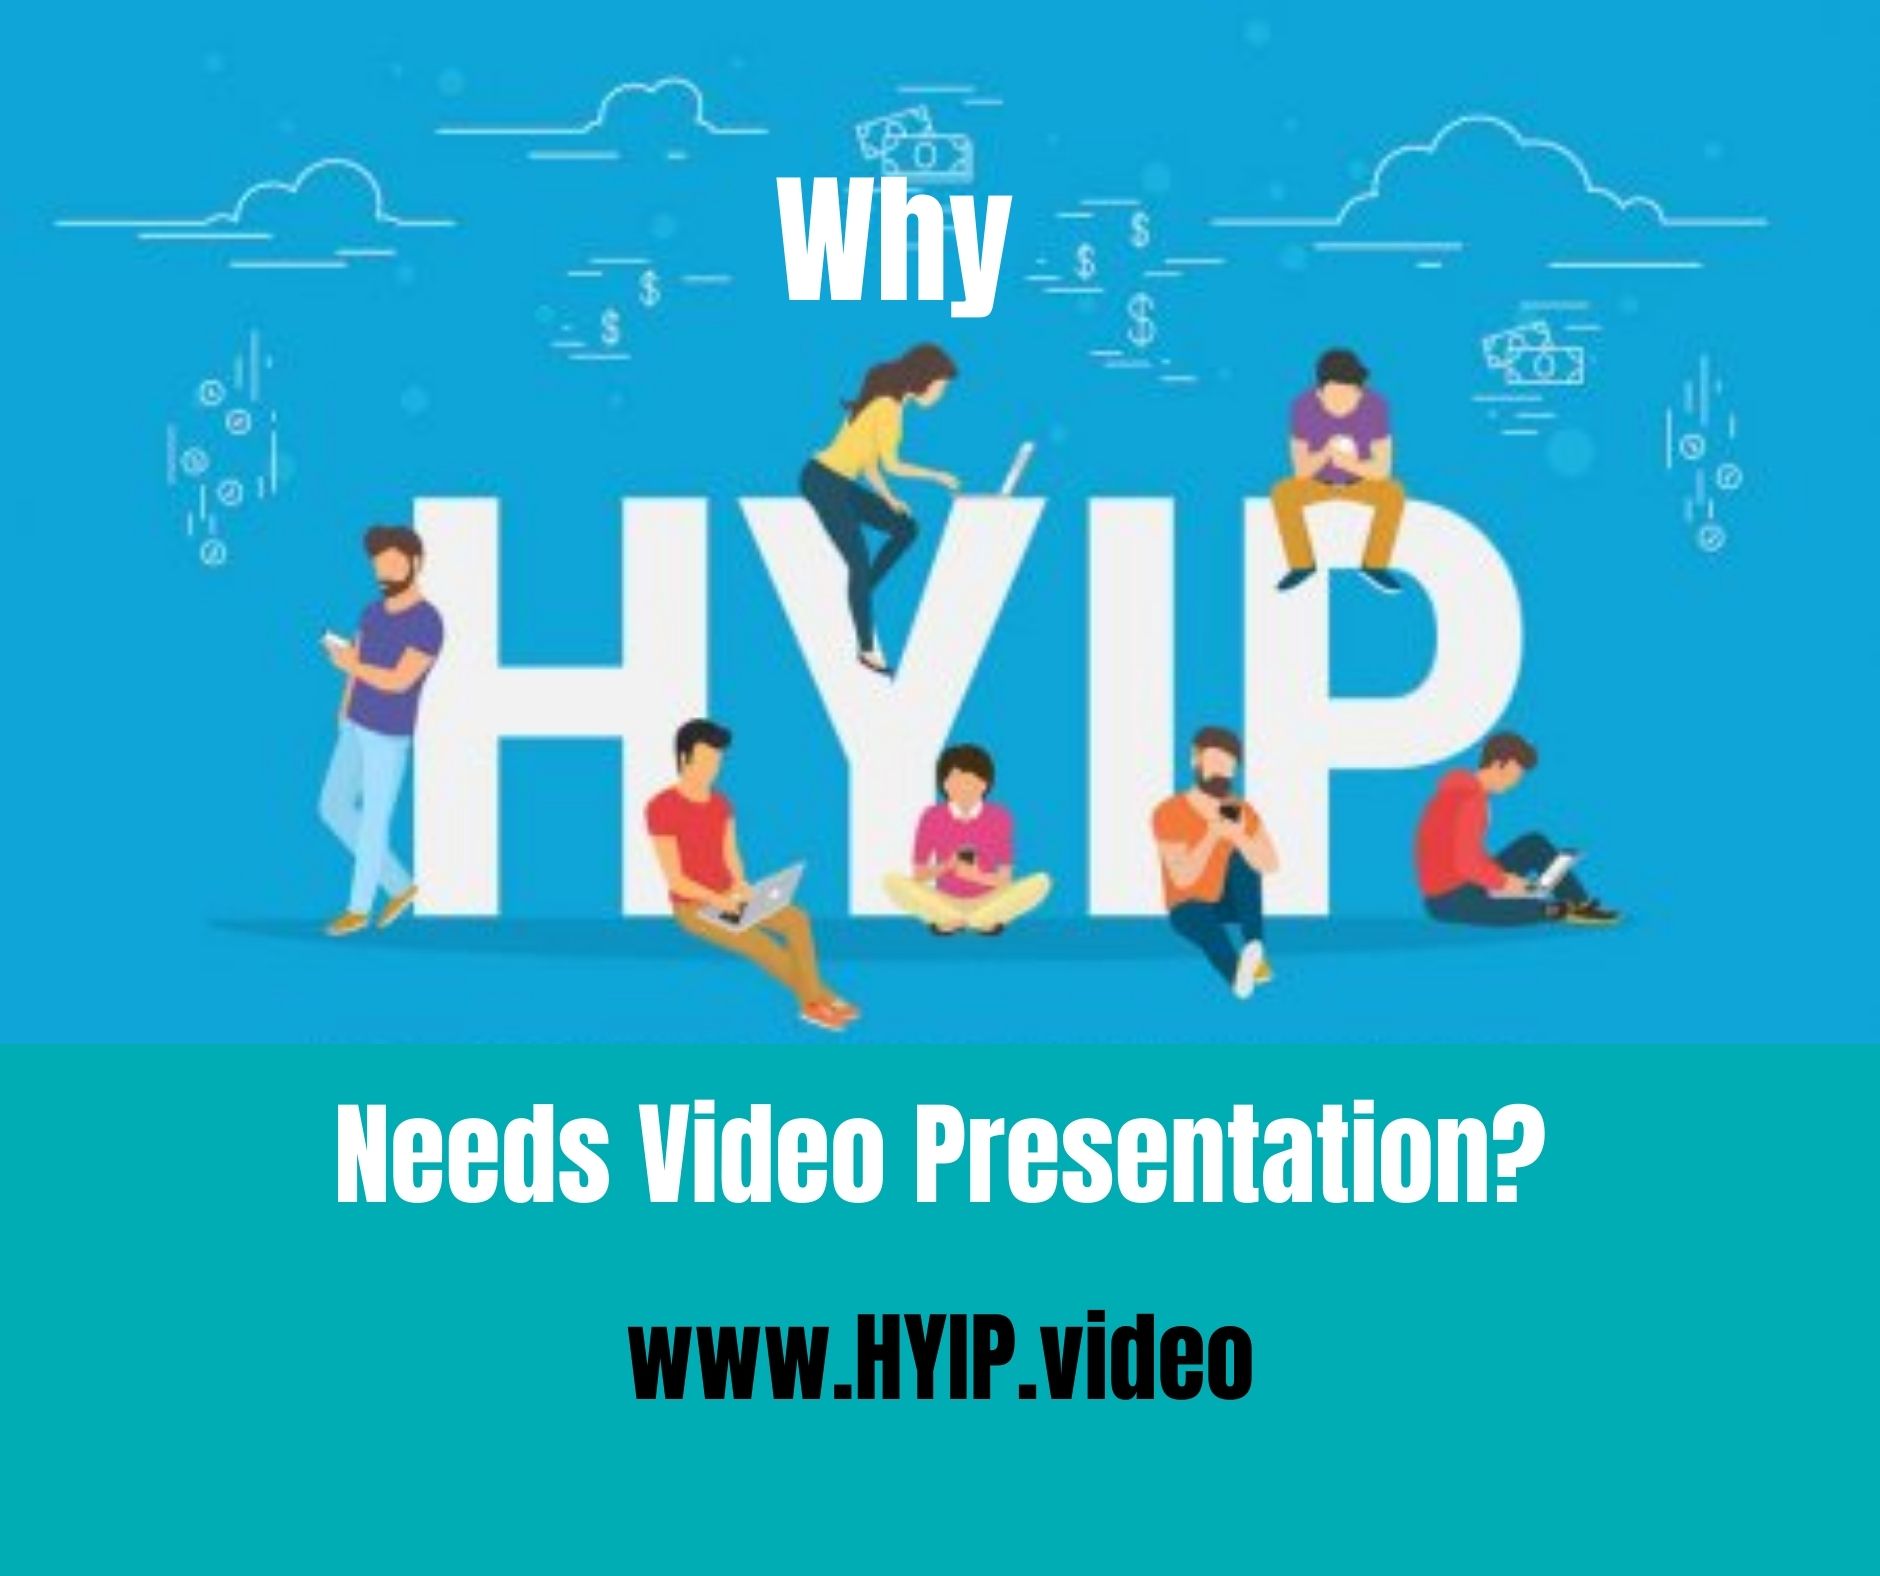 why HYIP needs video presentation